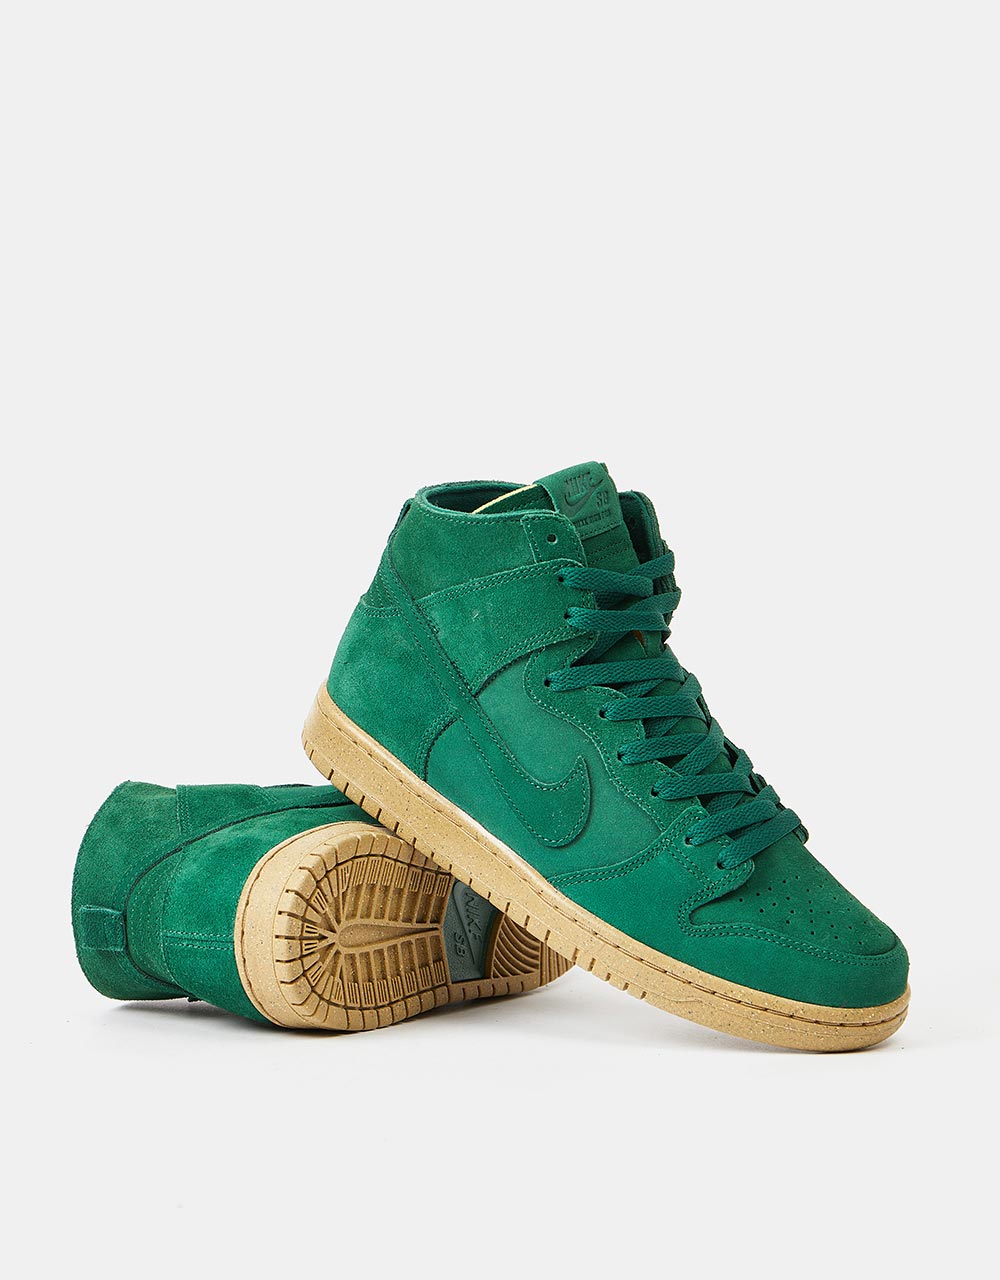 Nike SB Dunk High Pro Decon Skate Shoes - Gorge Green/Gorge Green-Black